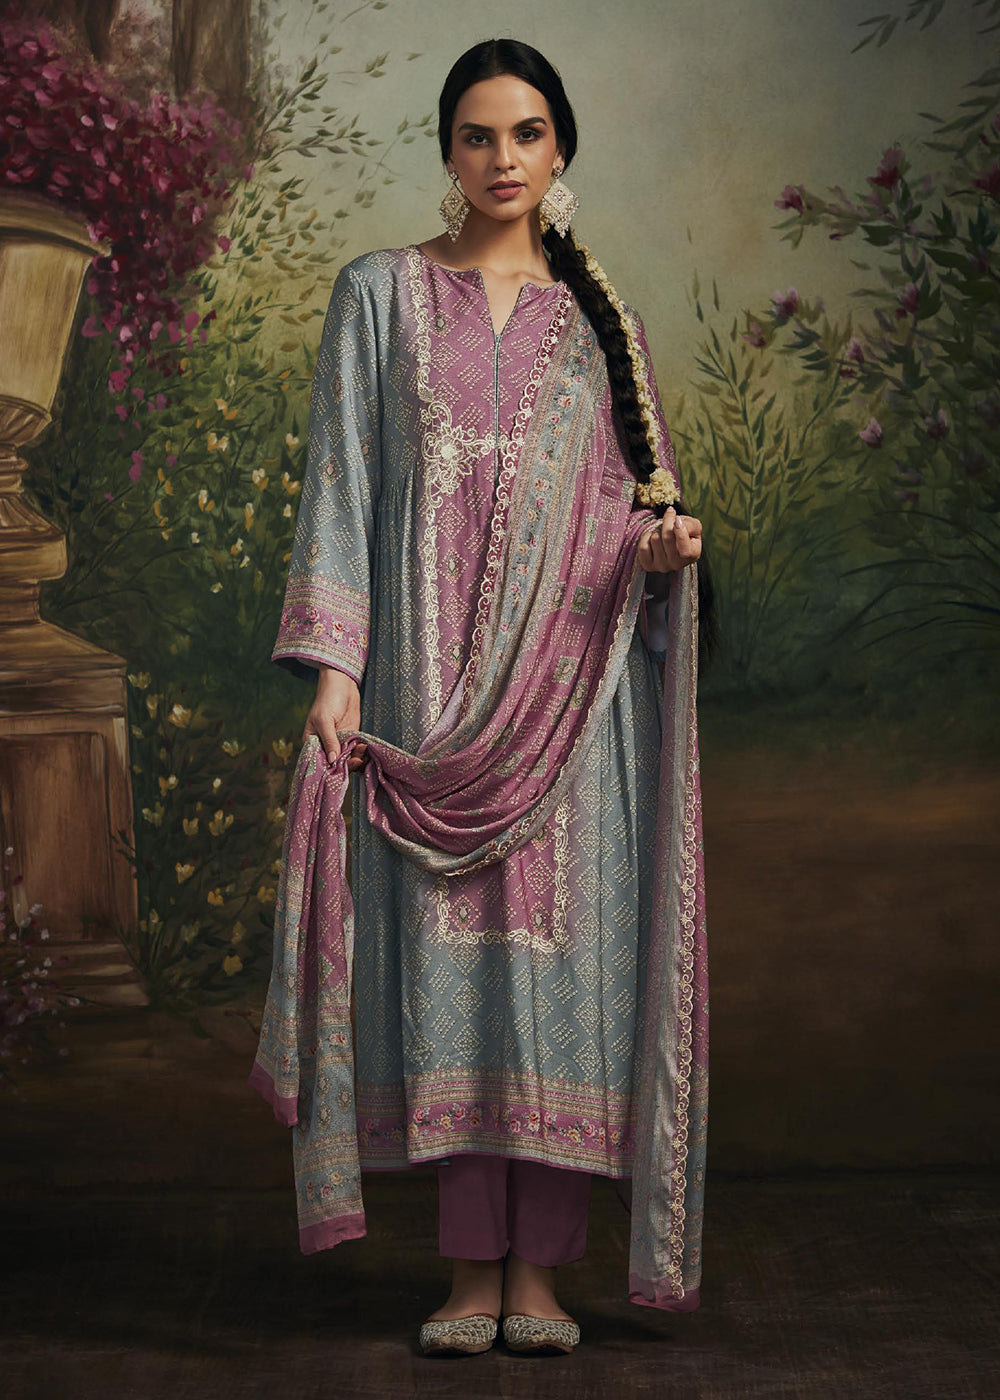 Buy Now Pakistani Style Grey & Pink Digital Printed Salwar Suit Online in USA, UK, Canada, Germany, Australia & Worldwide at Empress Clothing. 